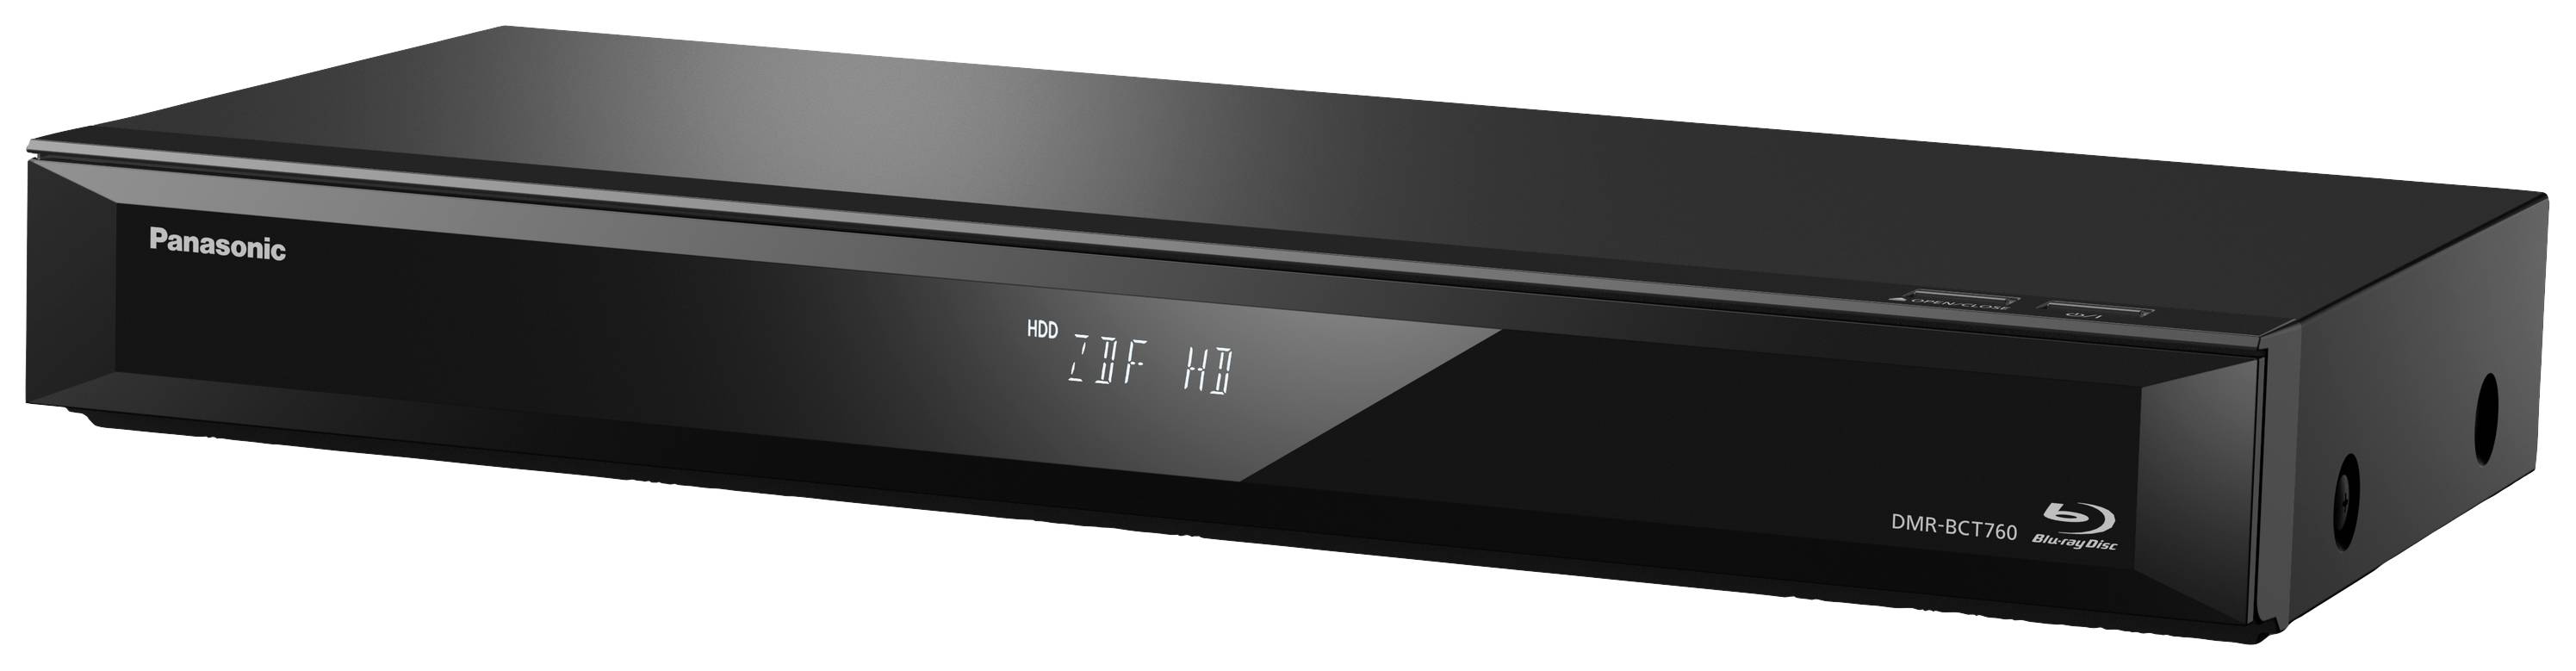 kradse Bevidst samle Panasonic DMR-BCT760AG Blu-ray player + HDD recorder 500 GB 4K upscaling,  CD player, High-res audio, DVB-C Twin HD tuner | Conrad.com